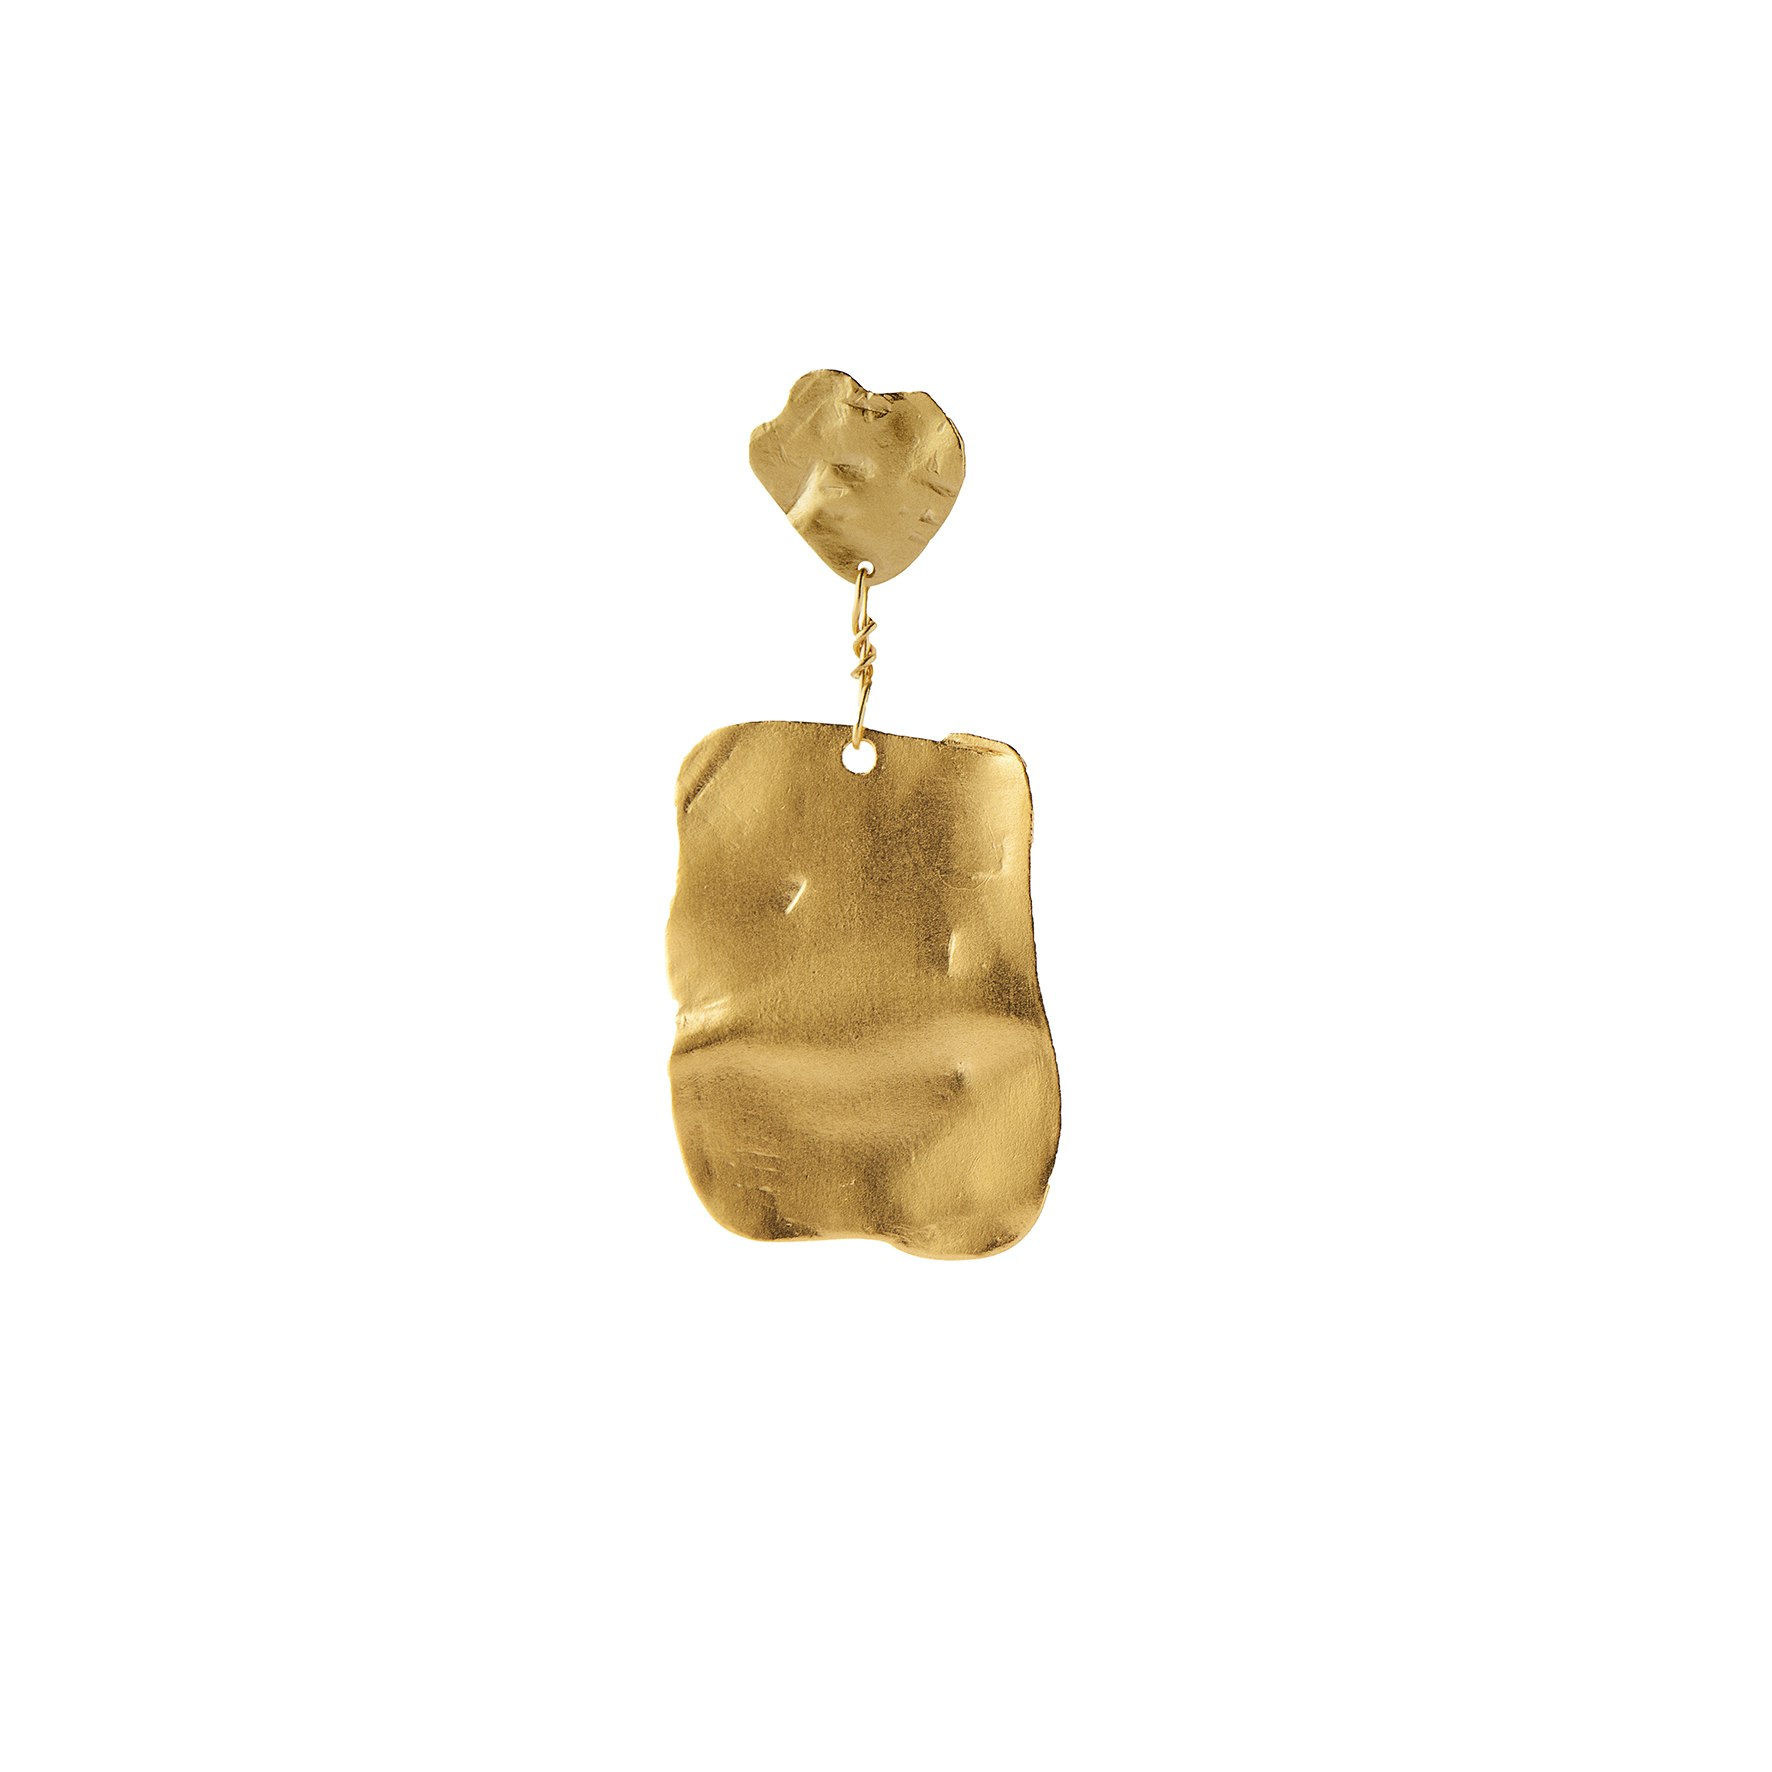 Golden Reflection Earring fra STINE A Jewelry i Forgyldt-Sølv Sterling 925